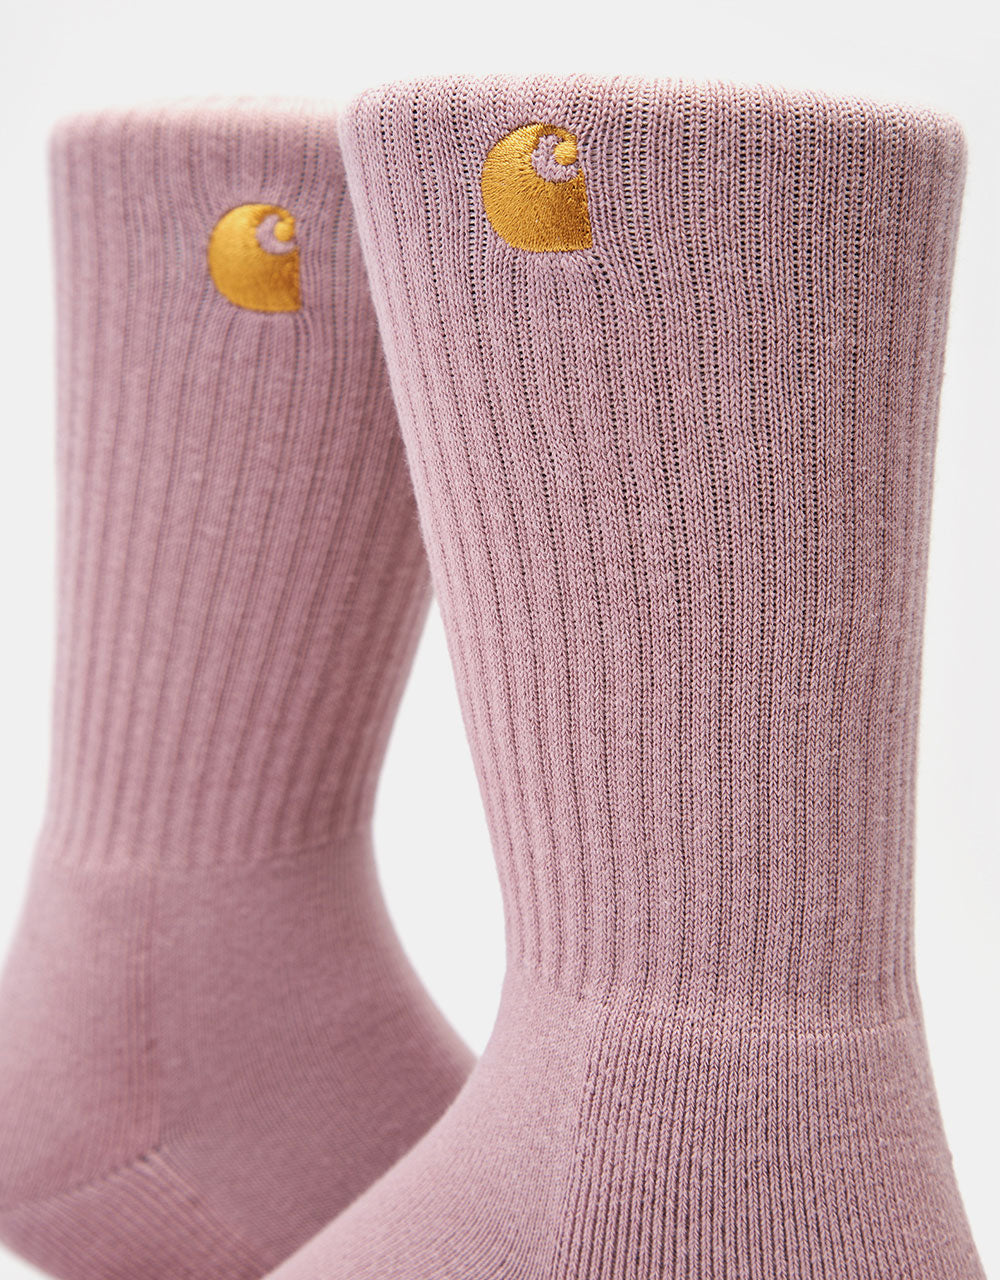 Carhartt WIP Chase Socks - Glassy Pink/Gold